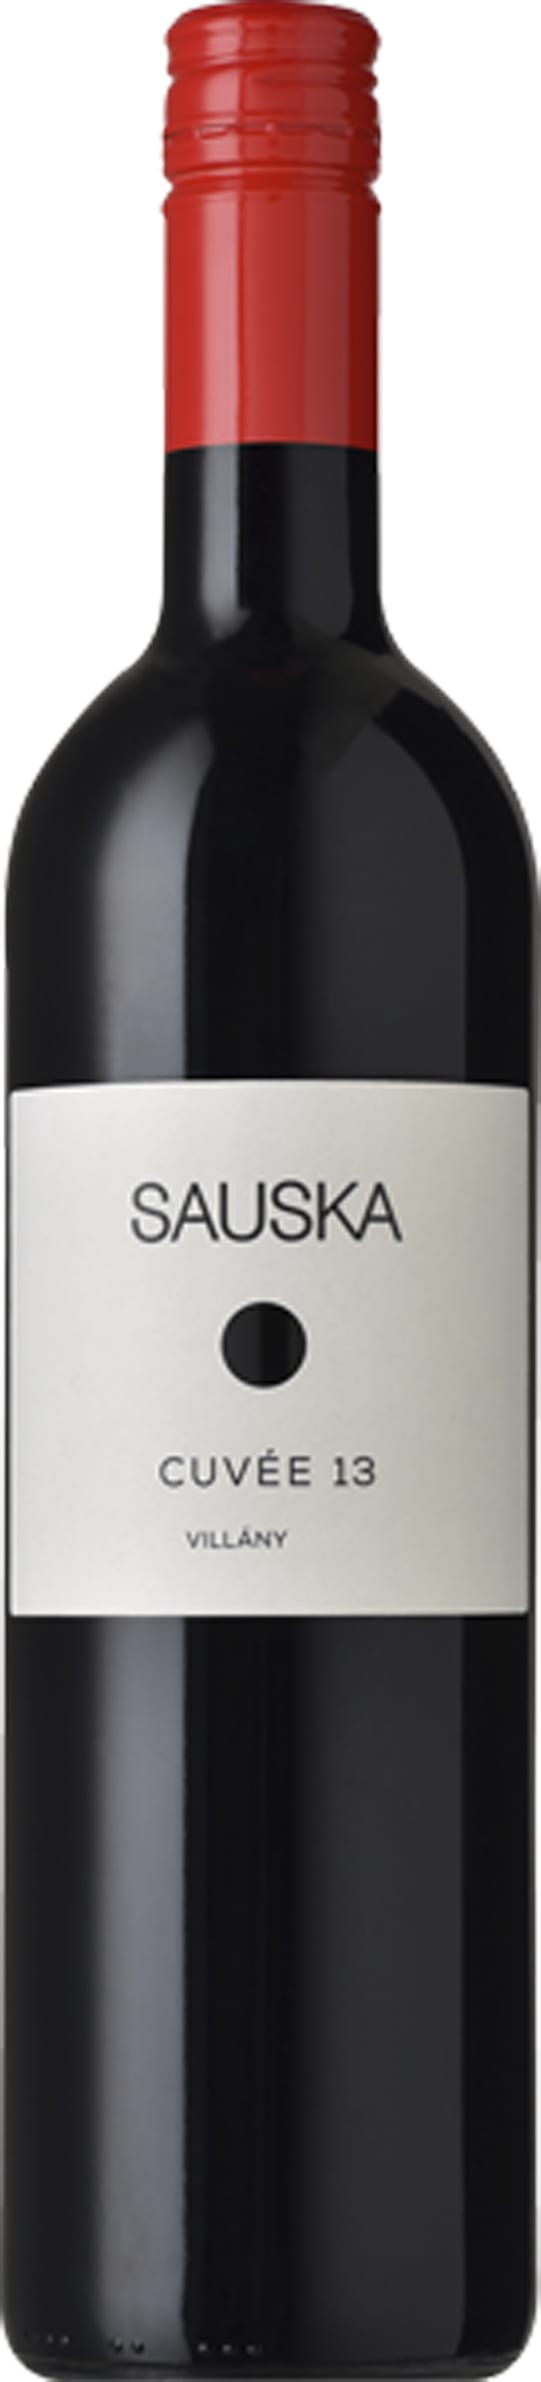 Sauska Cuvee 13 Red Blend 2020 6x75cl - Just Wines 